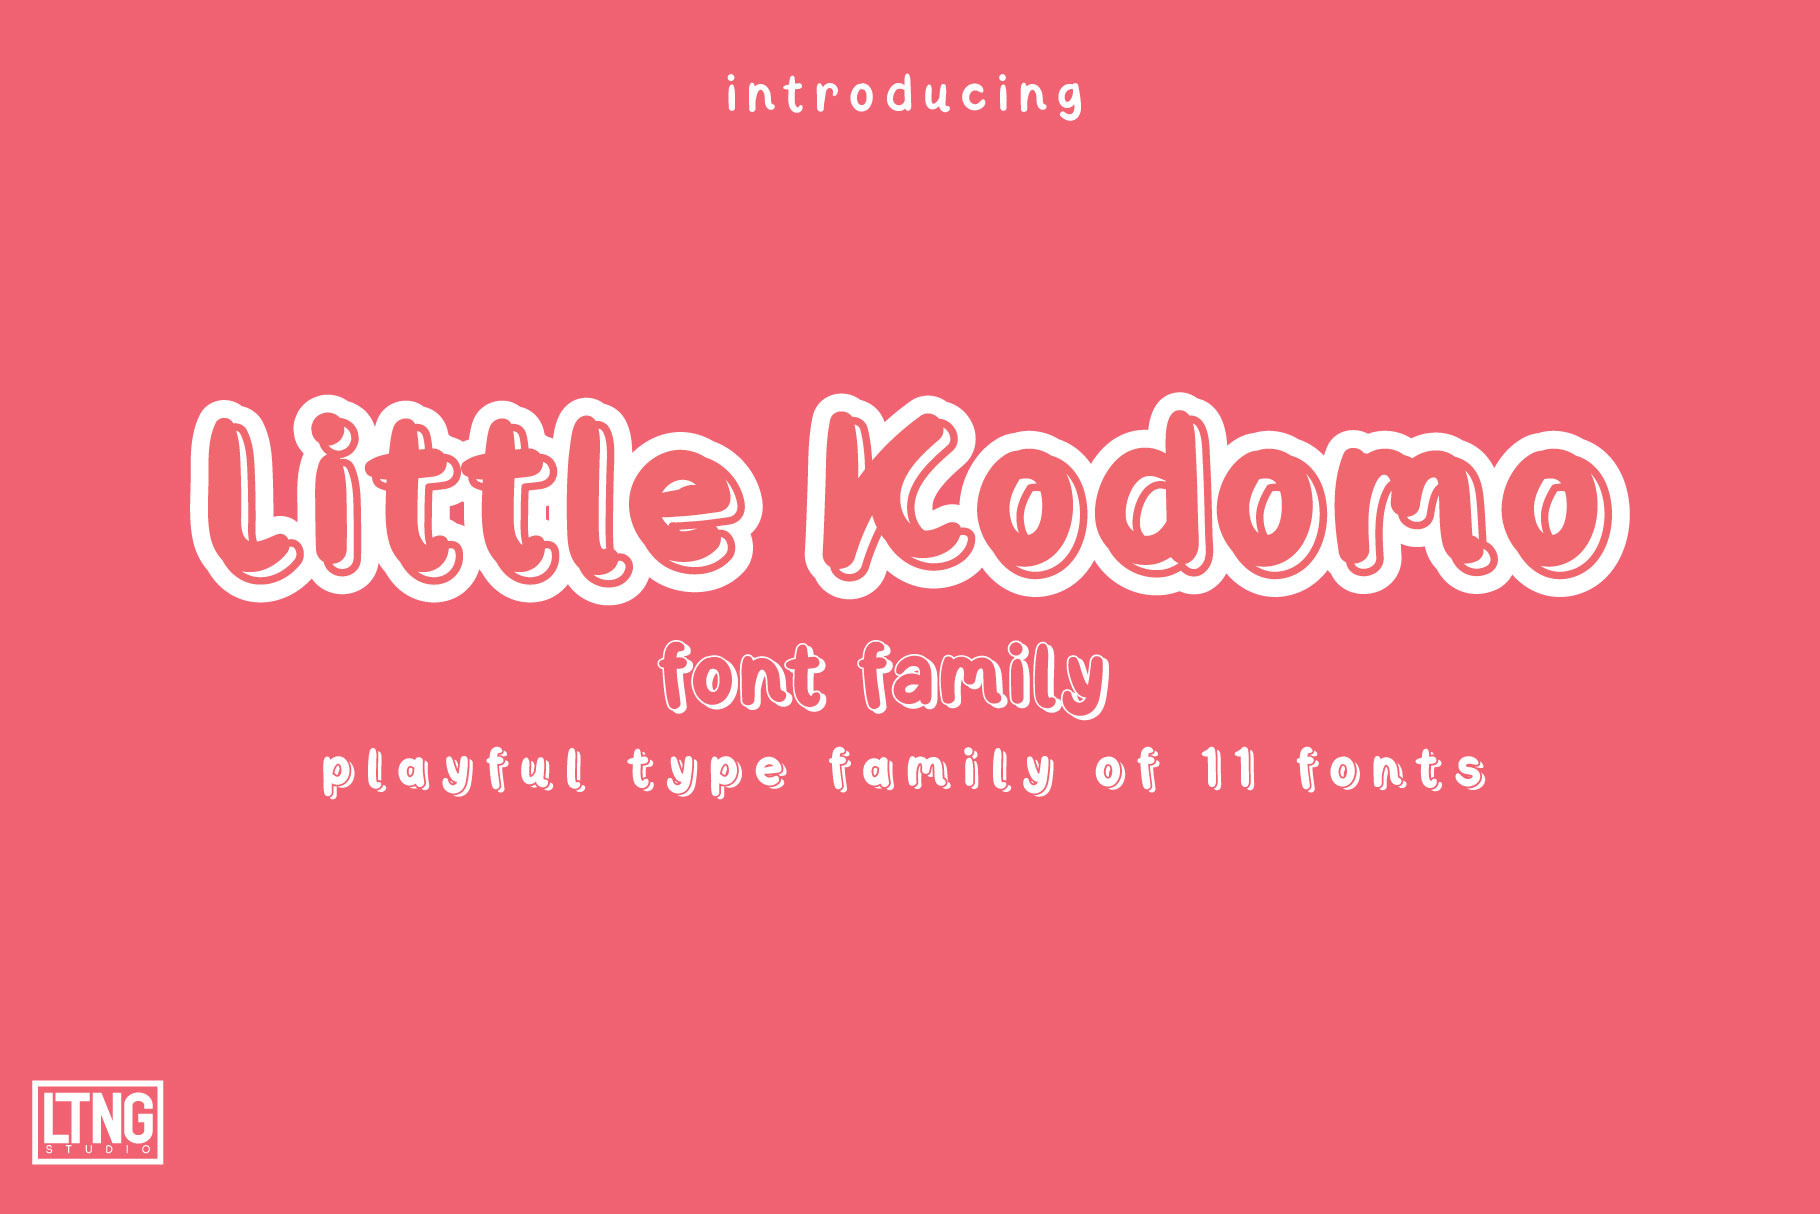 Little Kodomo Playful type family, a Font by LTNG STUDIO